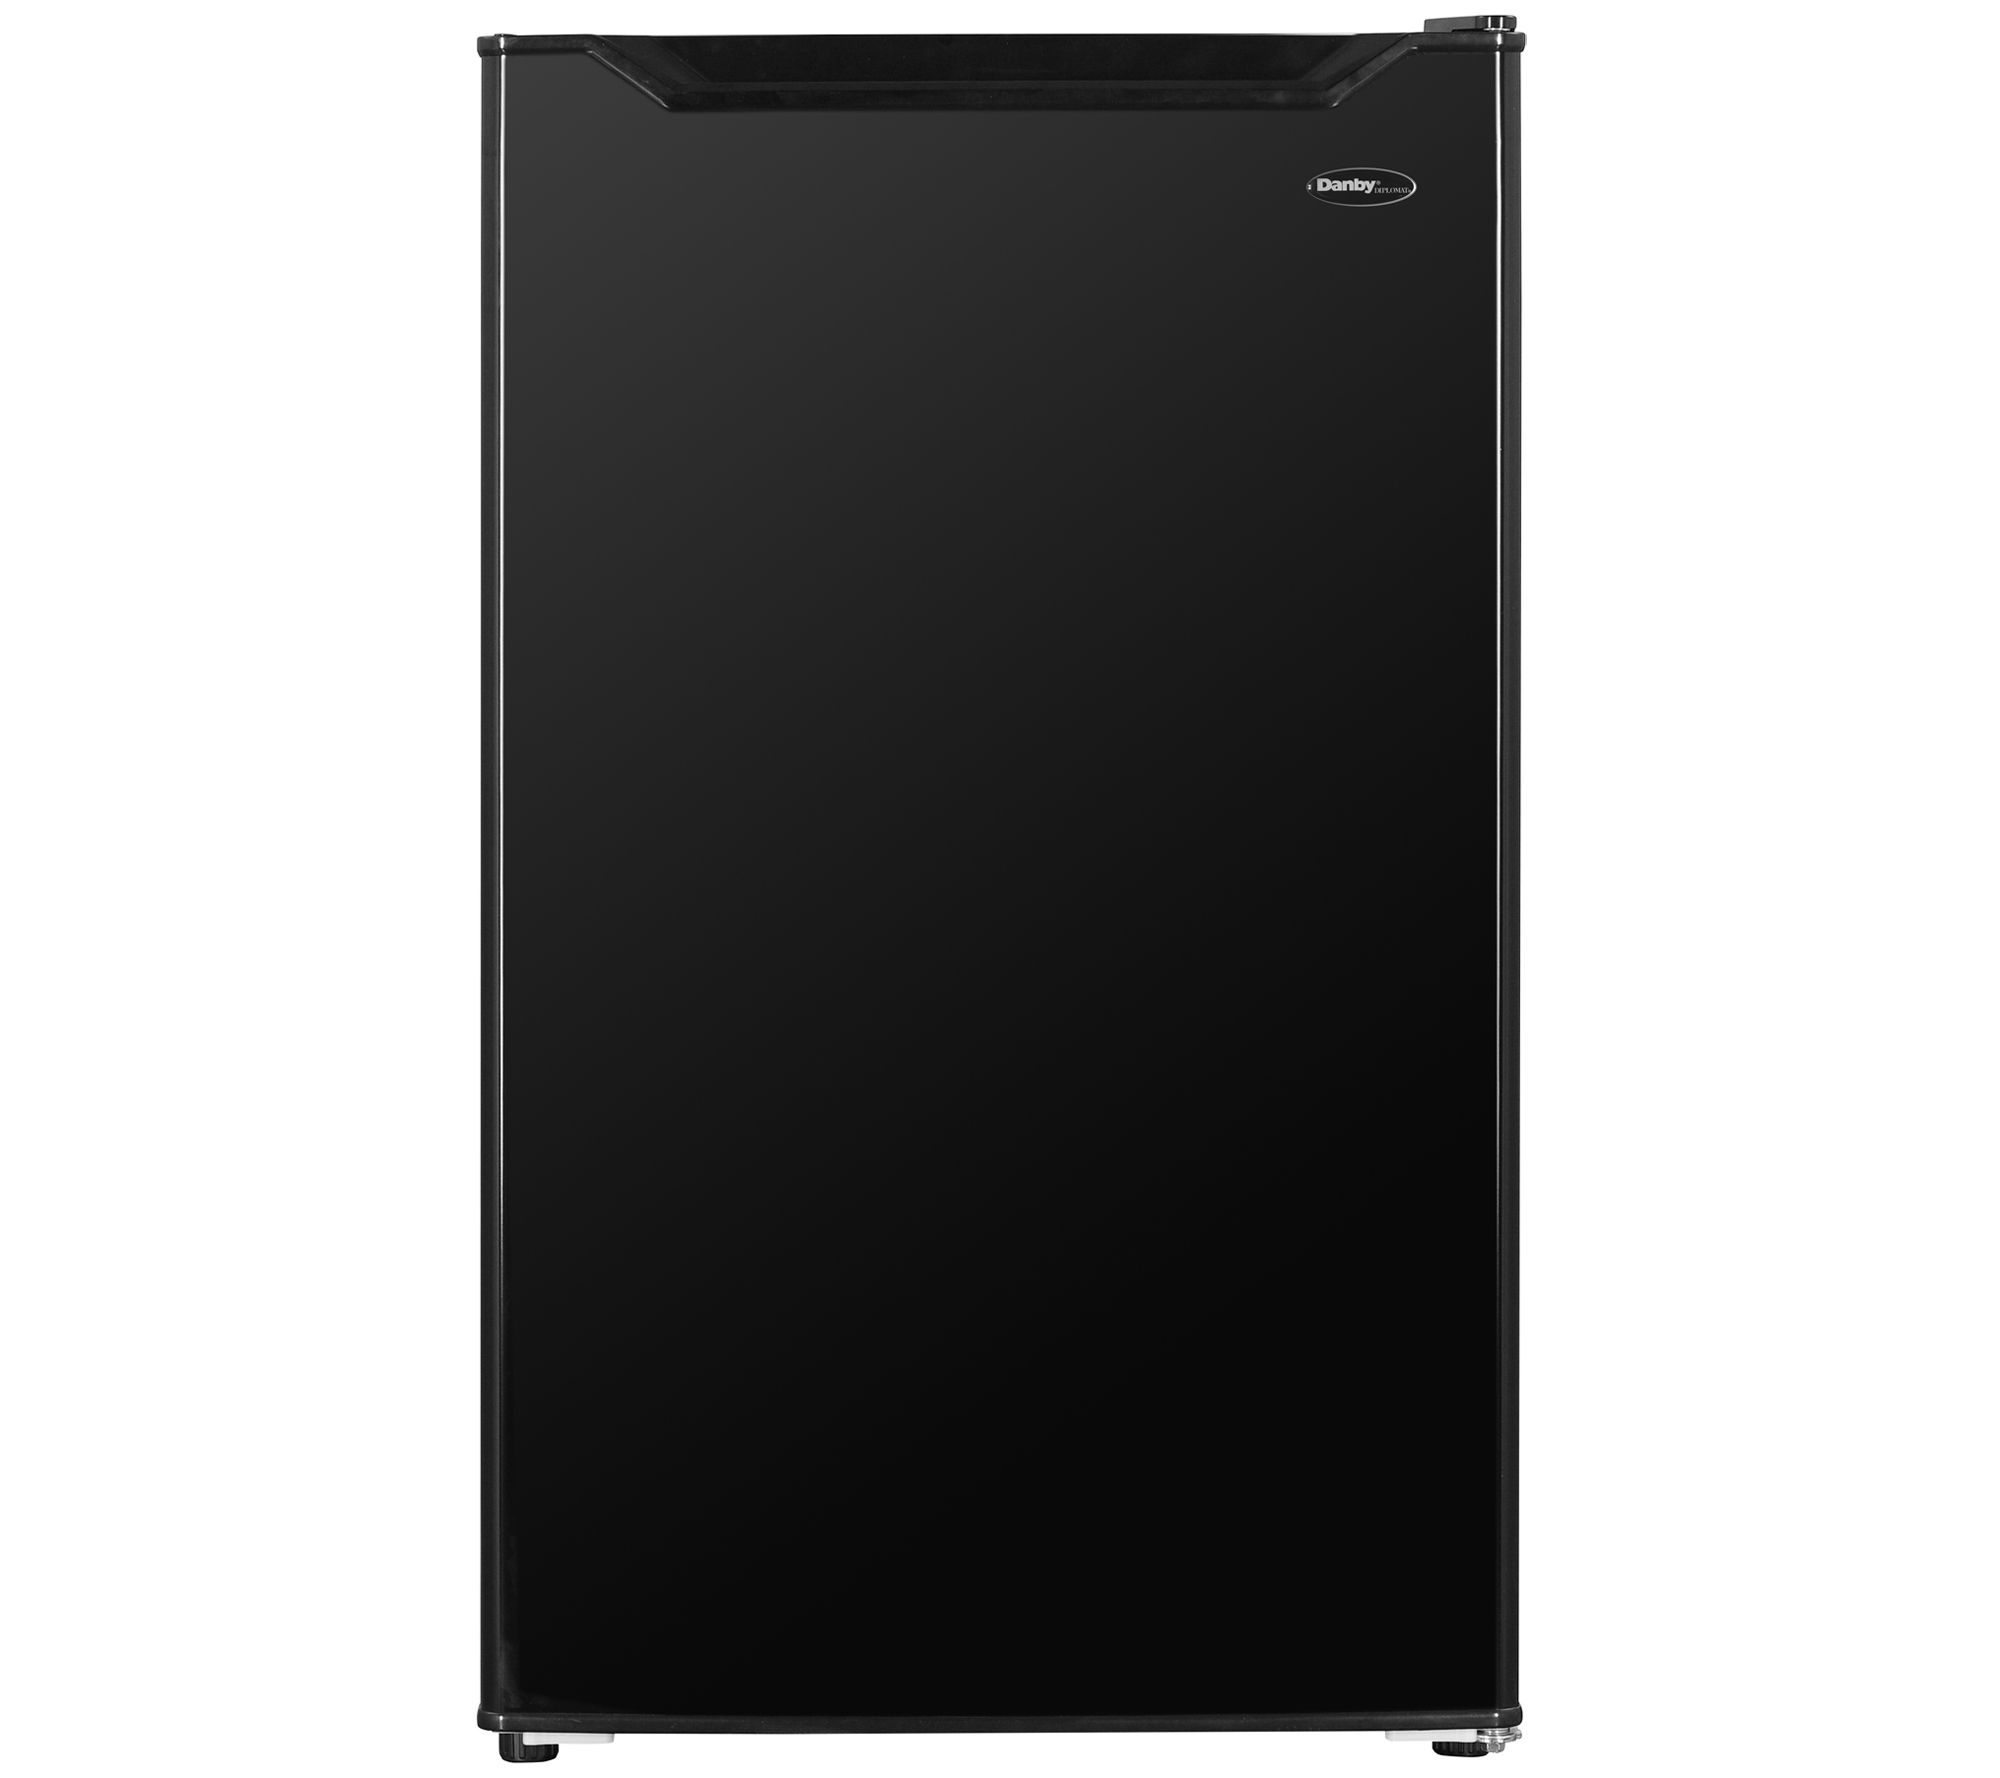 Ivation 62 Can Beverage Refrigerator, Freestanding Ultra Cool Mini Fridge